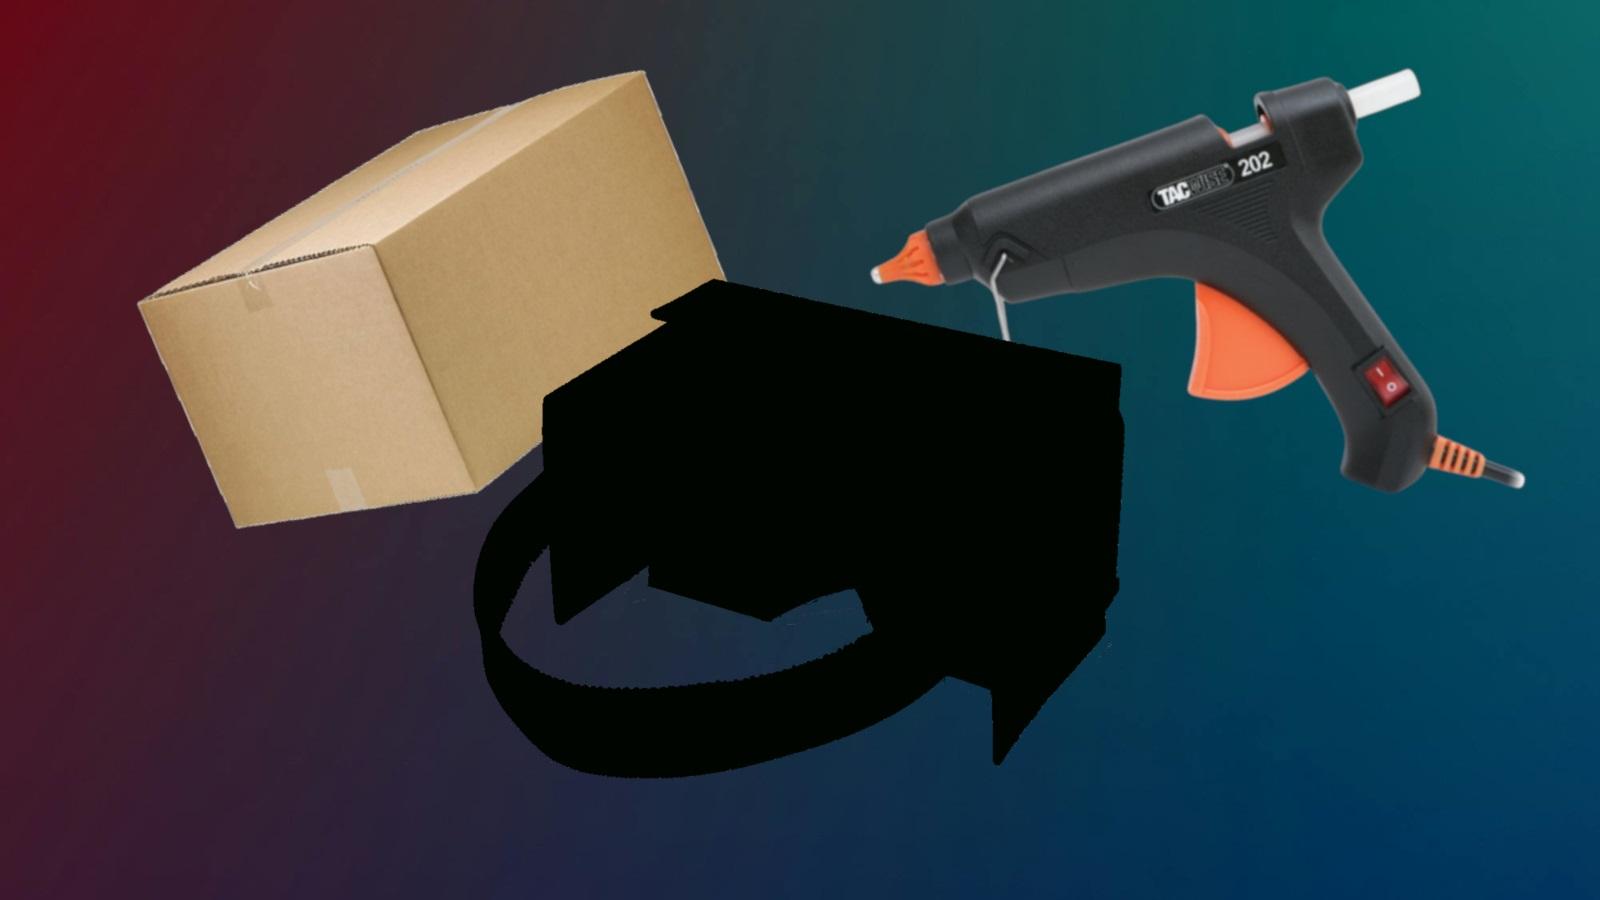 Cardboard Box, Hot Glue gun and VR headset silhouette